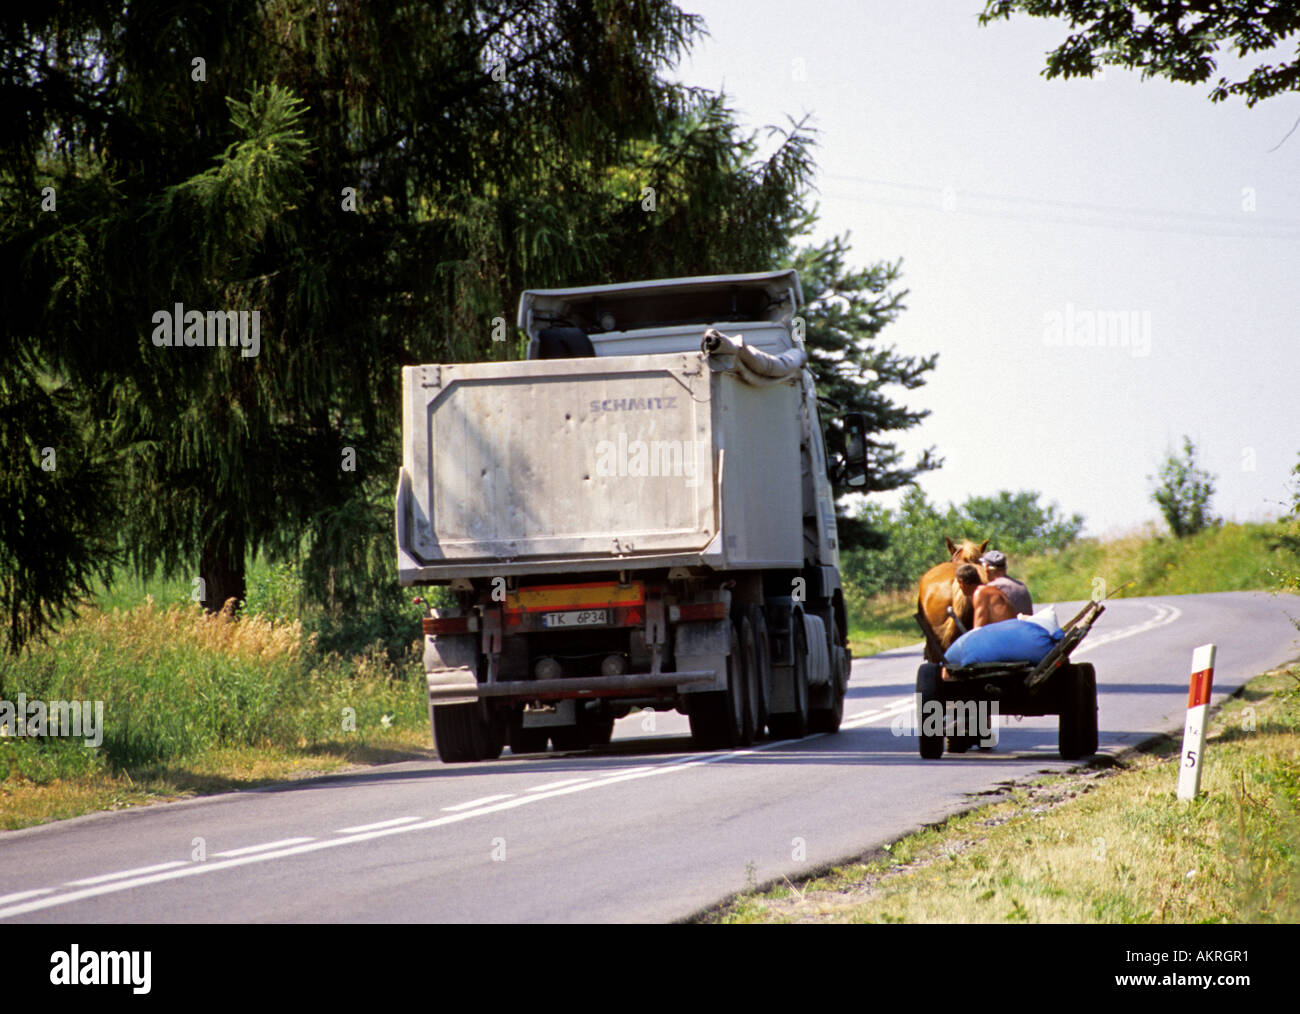 Poland, dangerous driving, lorry truck overtake, overtaking Stock Photo